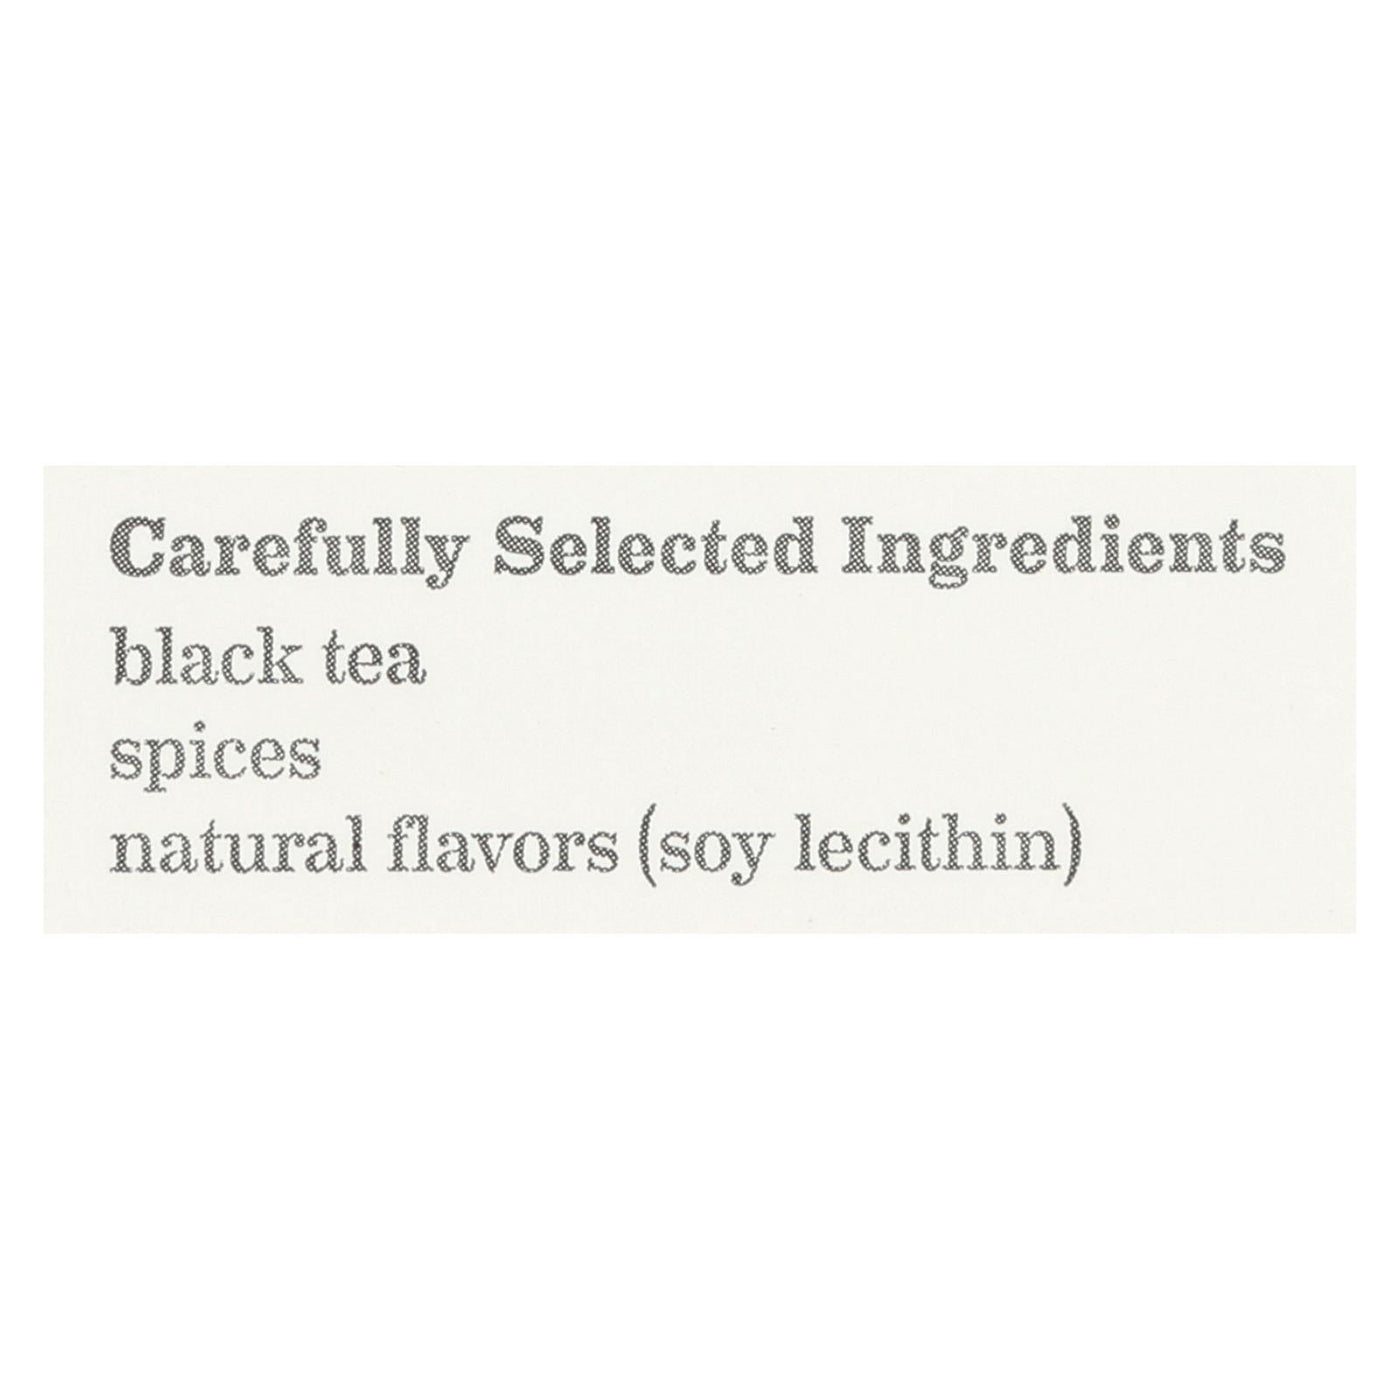 Bigelow Tea Black Tea - Spiced Chai - Case Of 6 - 20 Bag | OnlyNaturals.us